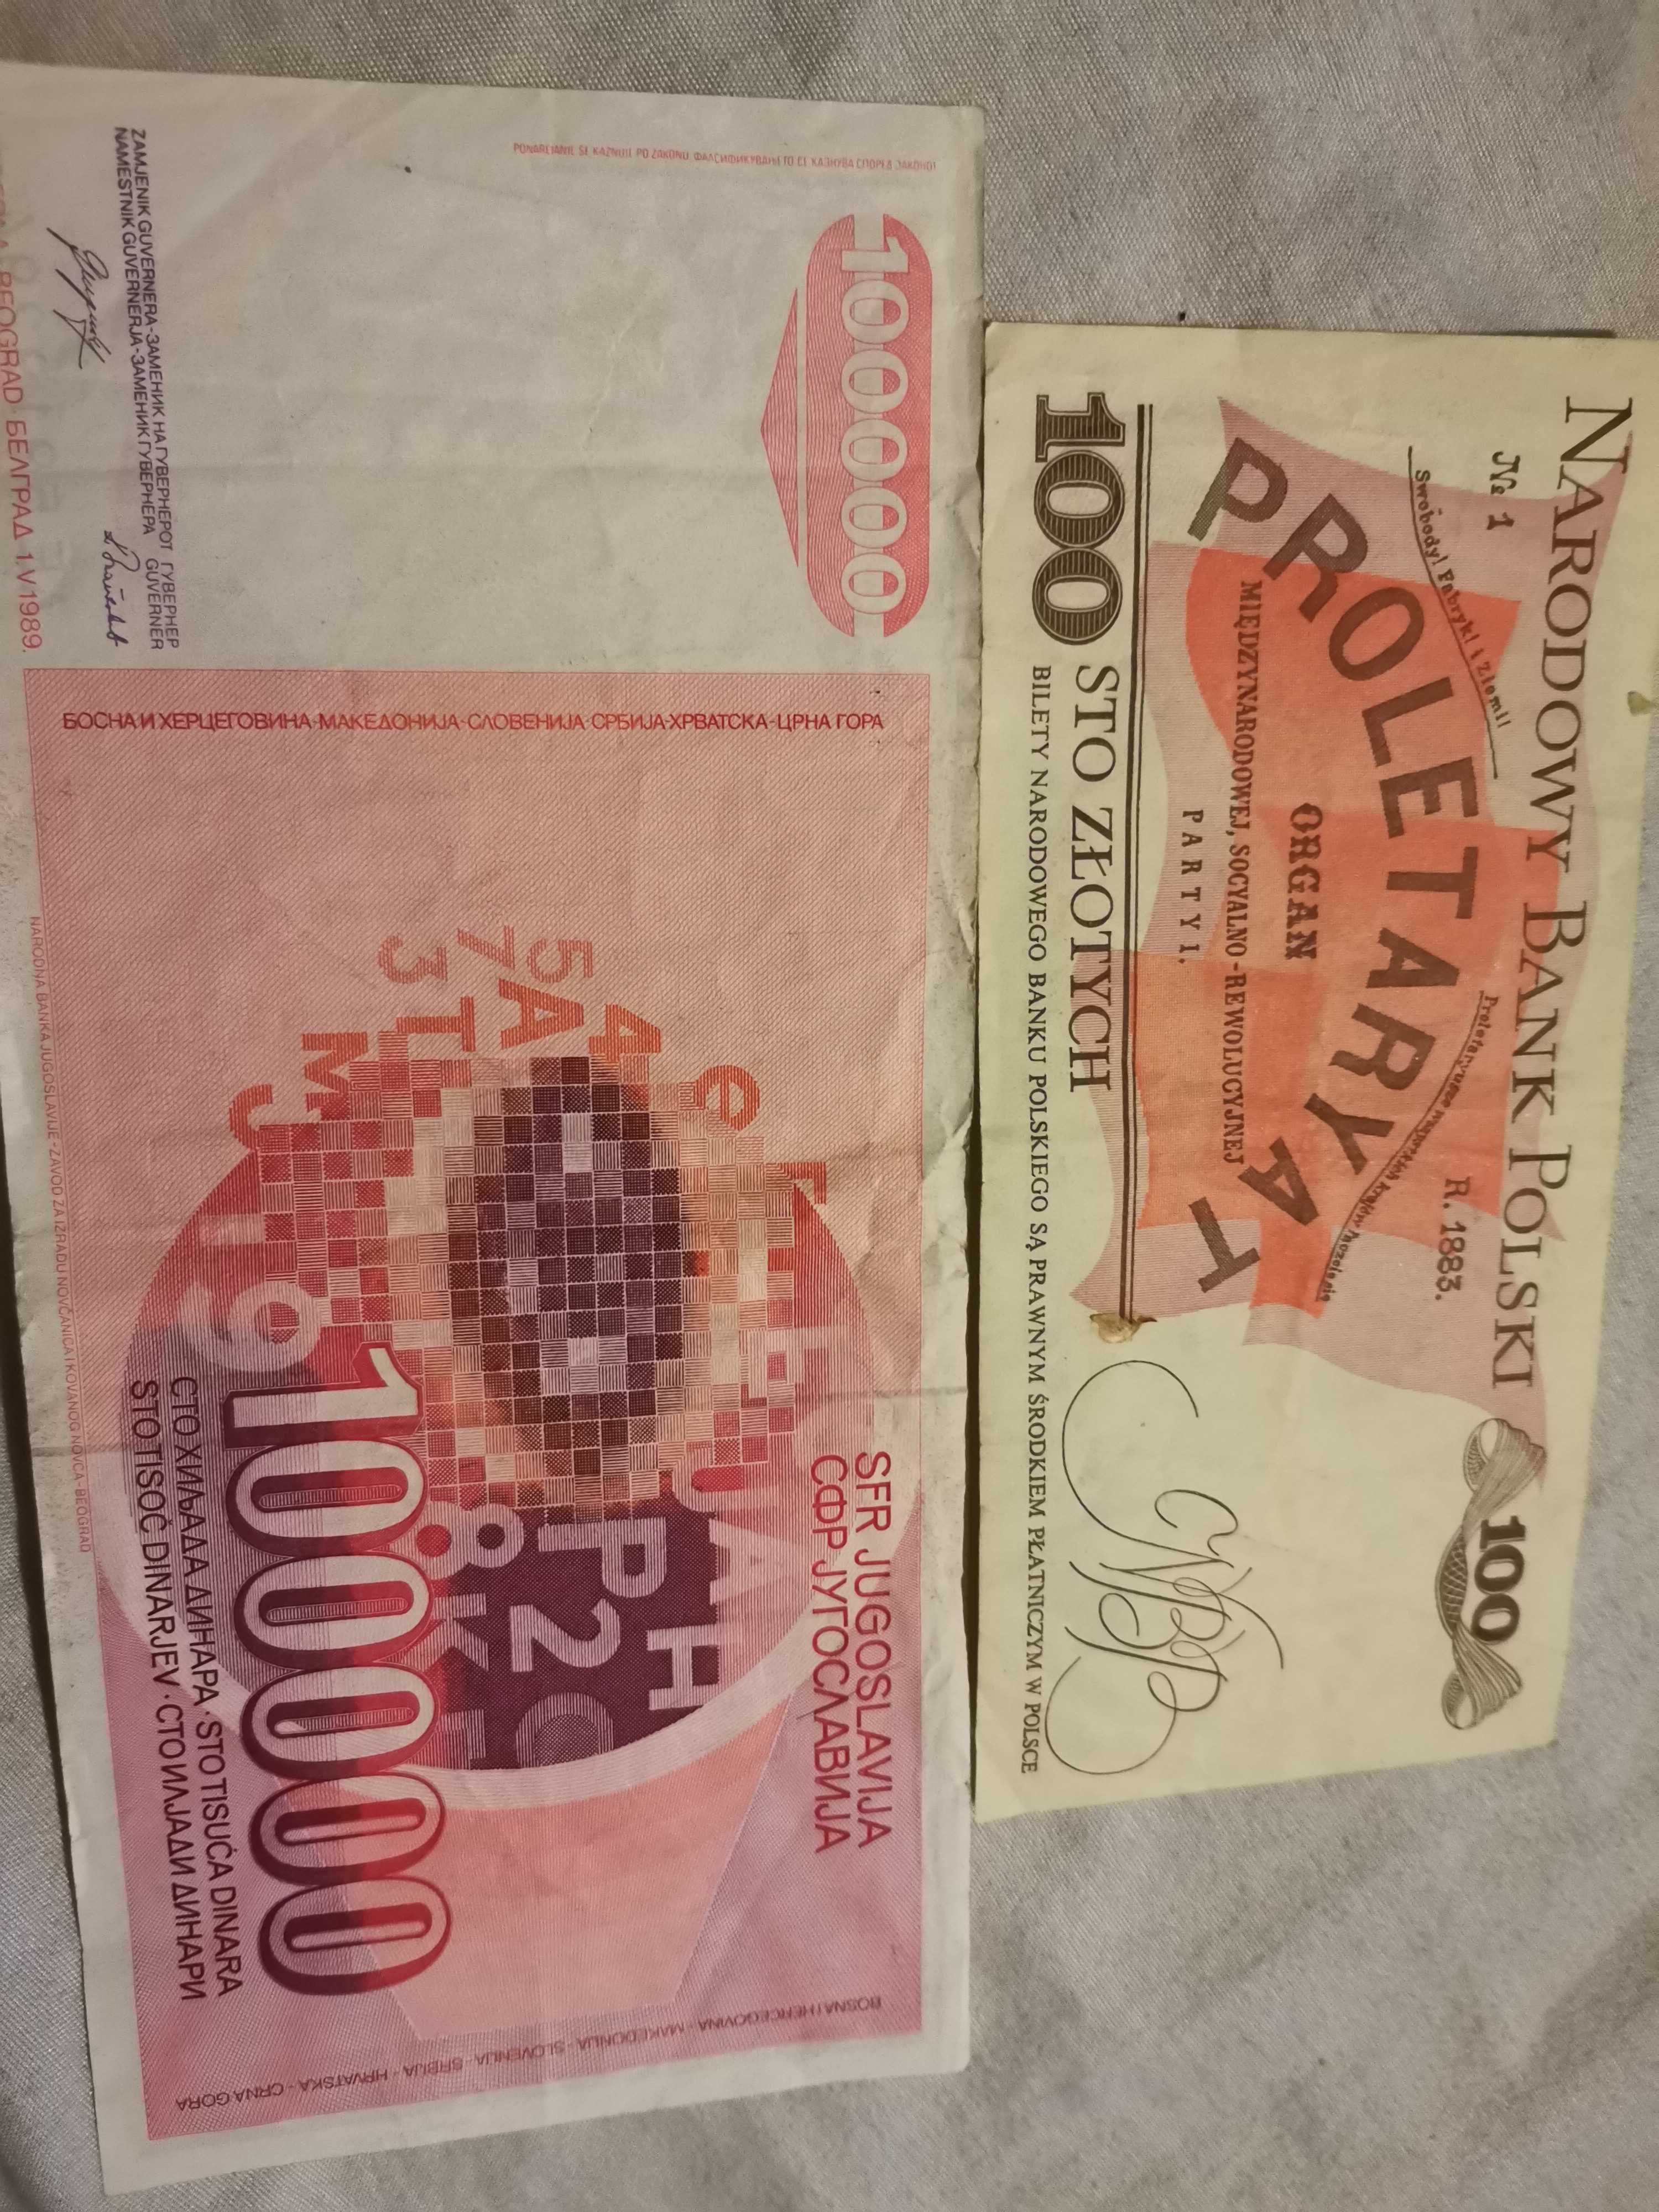 Bancnote și monede românești, 1poloneza și Iugoslava